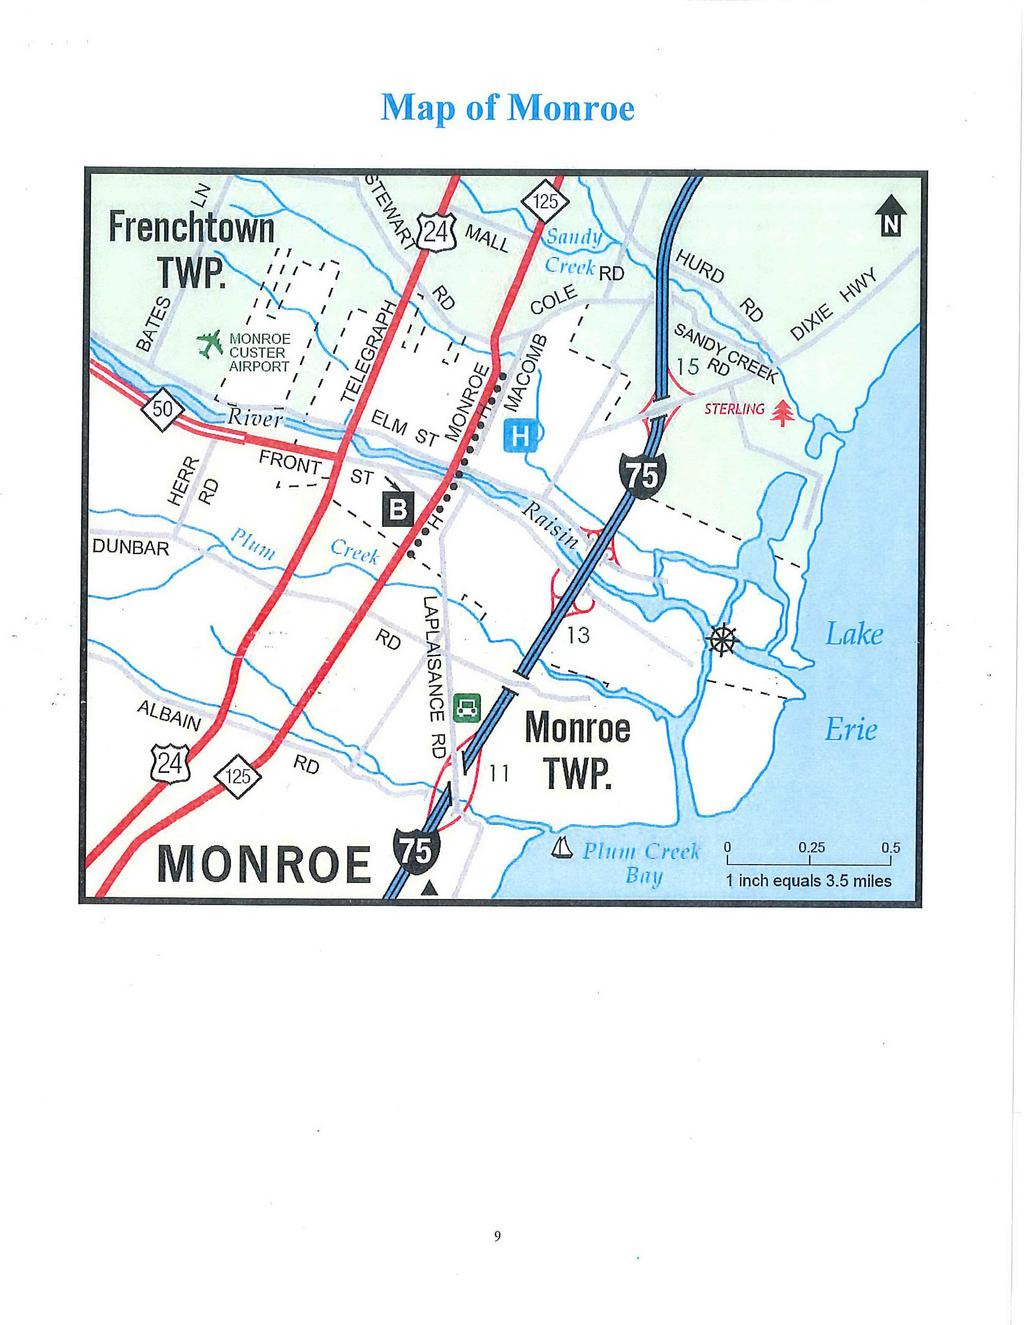 Map of Monroe Frenchtown 24 q 125 FMONROE DUNBAR Q *" 24 R NTWP